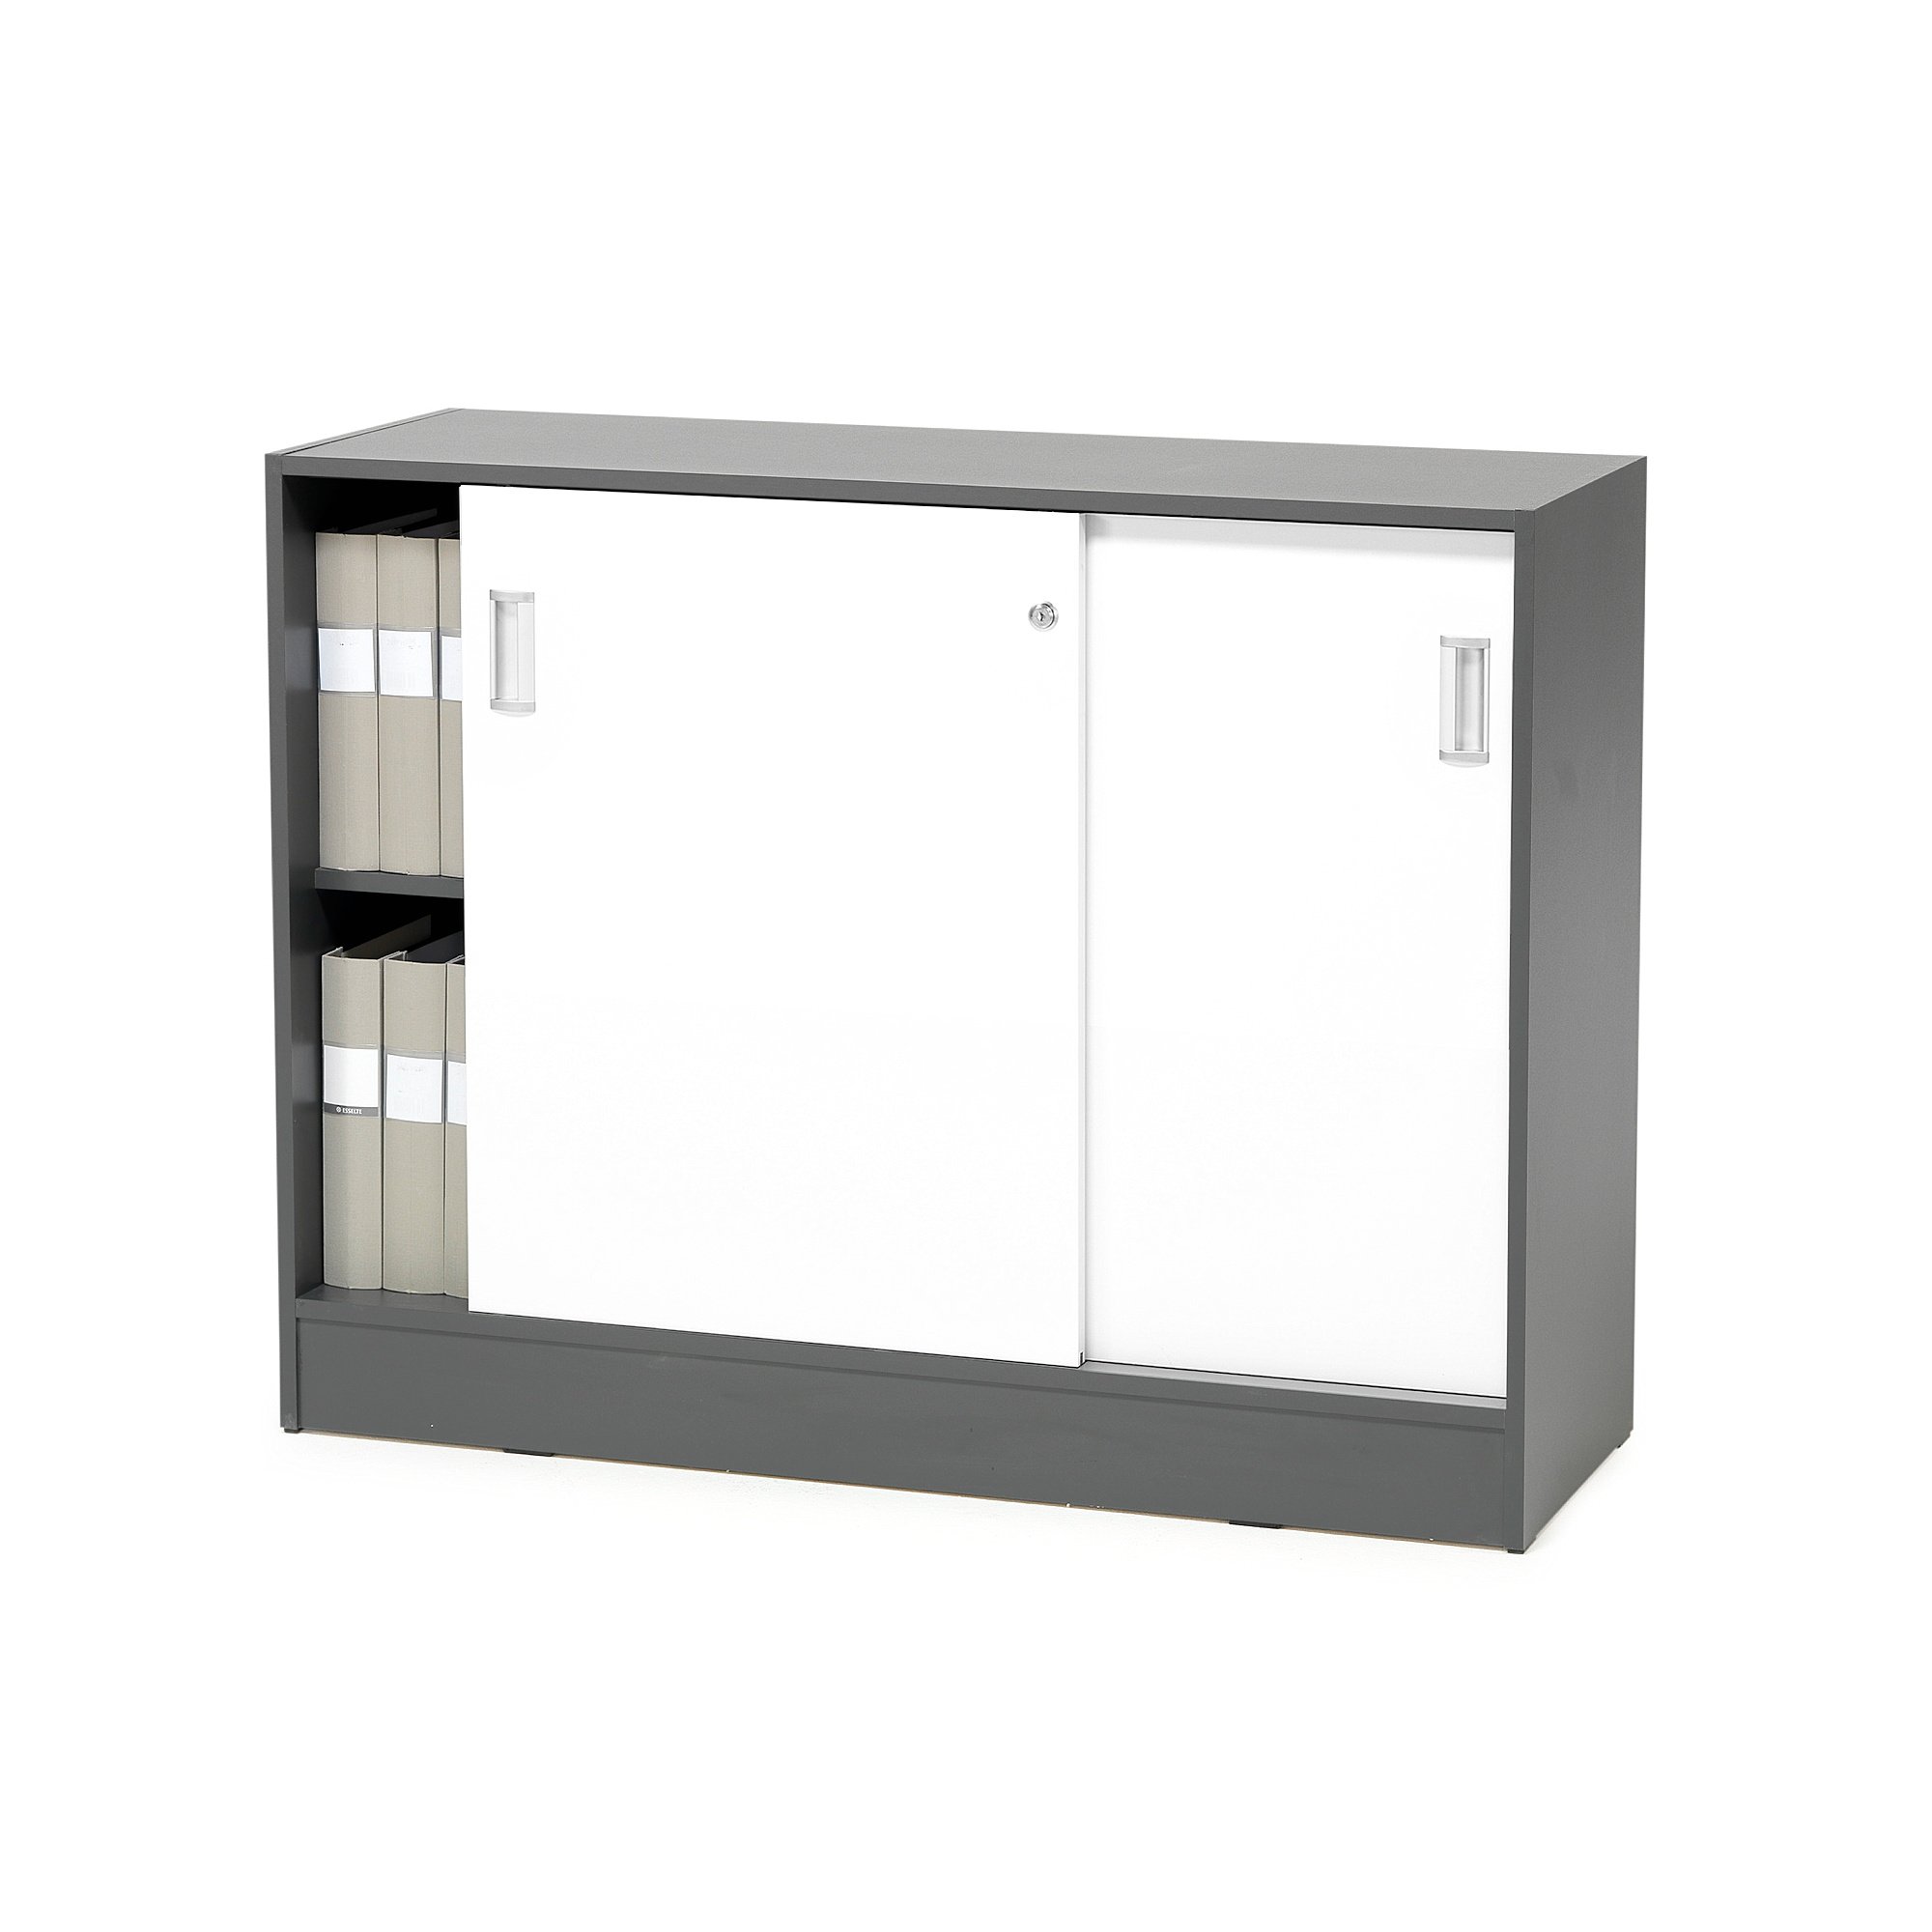 Skříň s posuvnými dveřmi FLEXUS, 925x1200x415 mm, šedá, bílé dveře